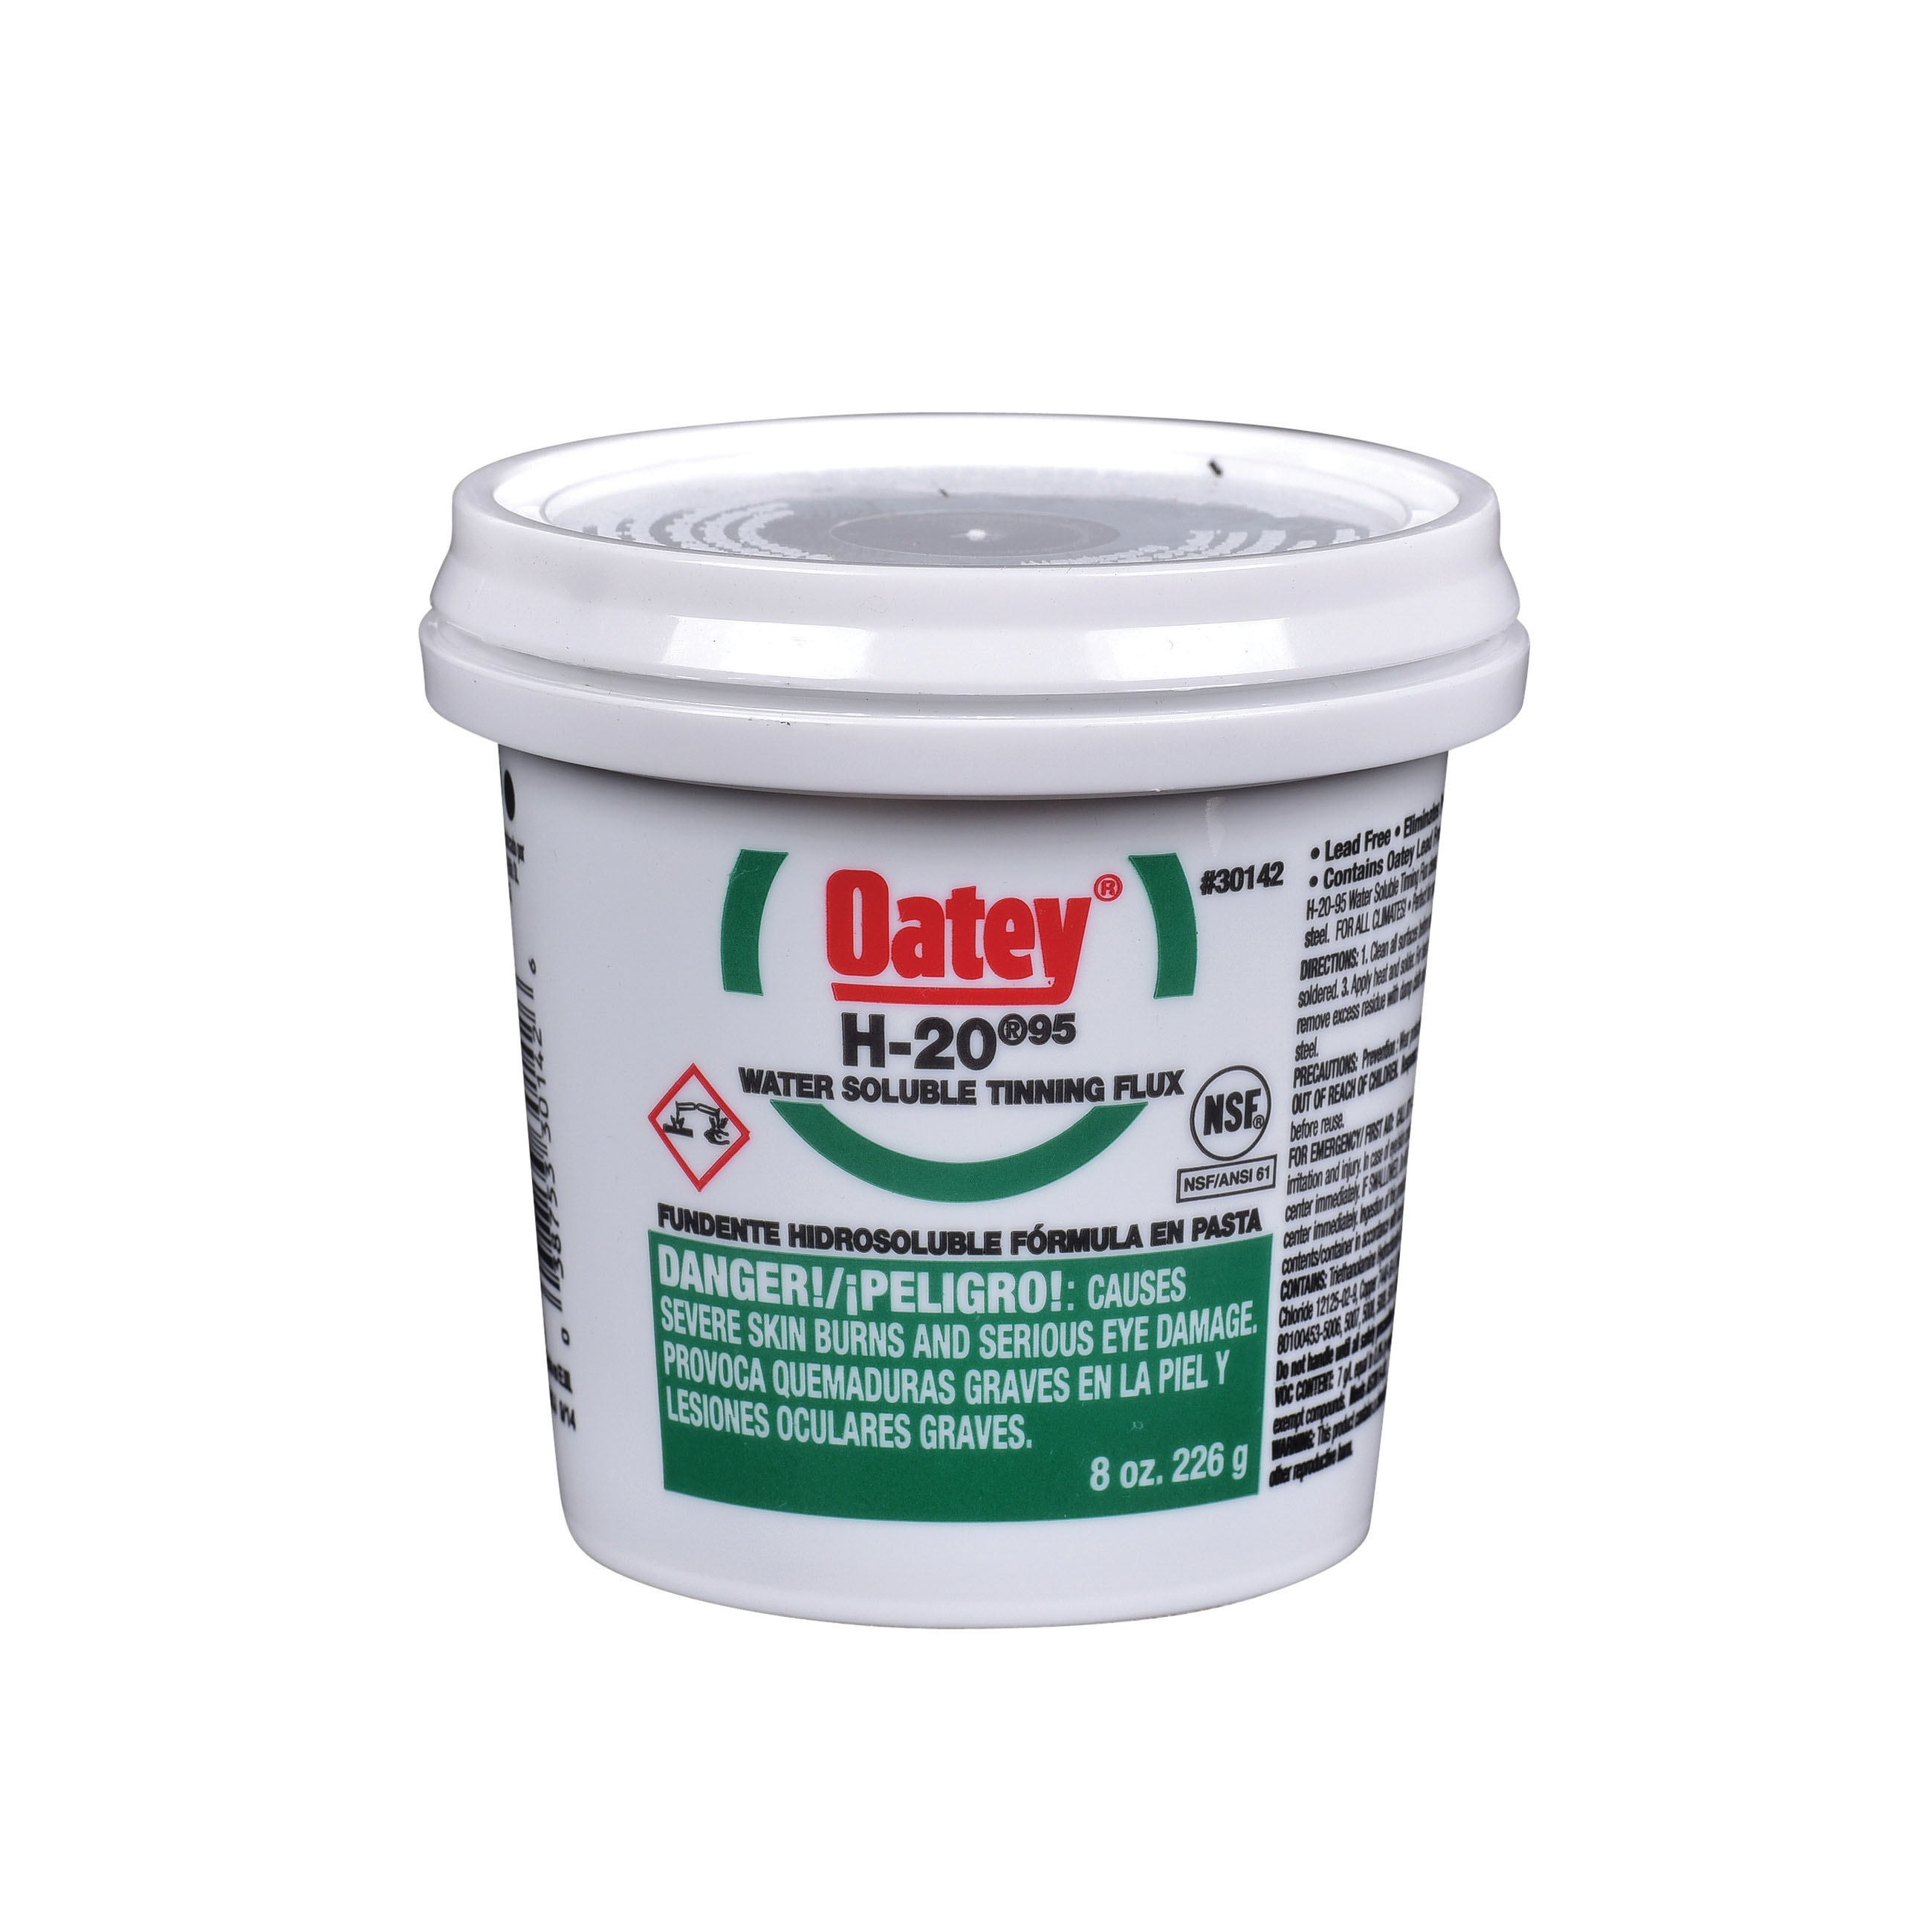 Oatey® 30143 Water Soluble Tinning Flux, Greenish Gray, 16 oz Bucket, 400 - 700 deg F